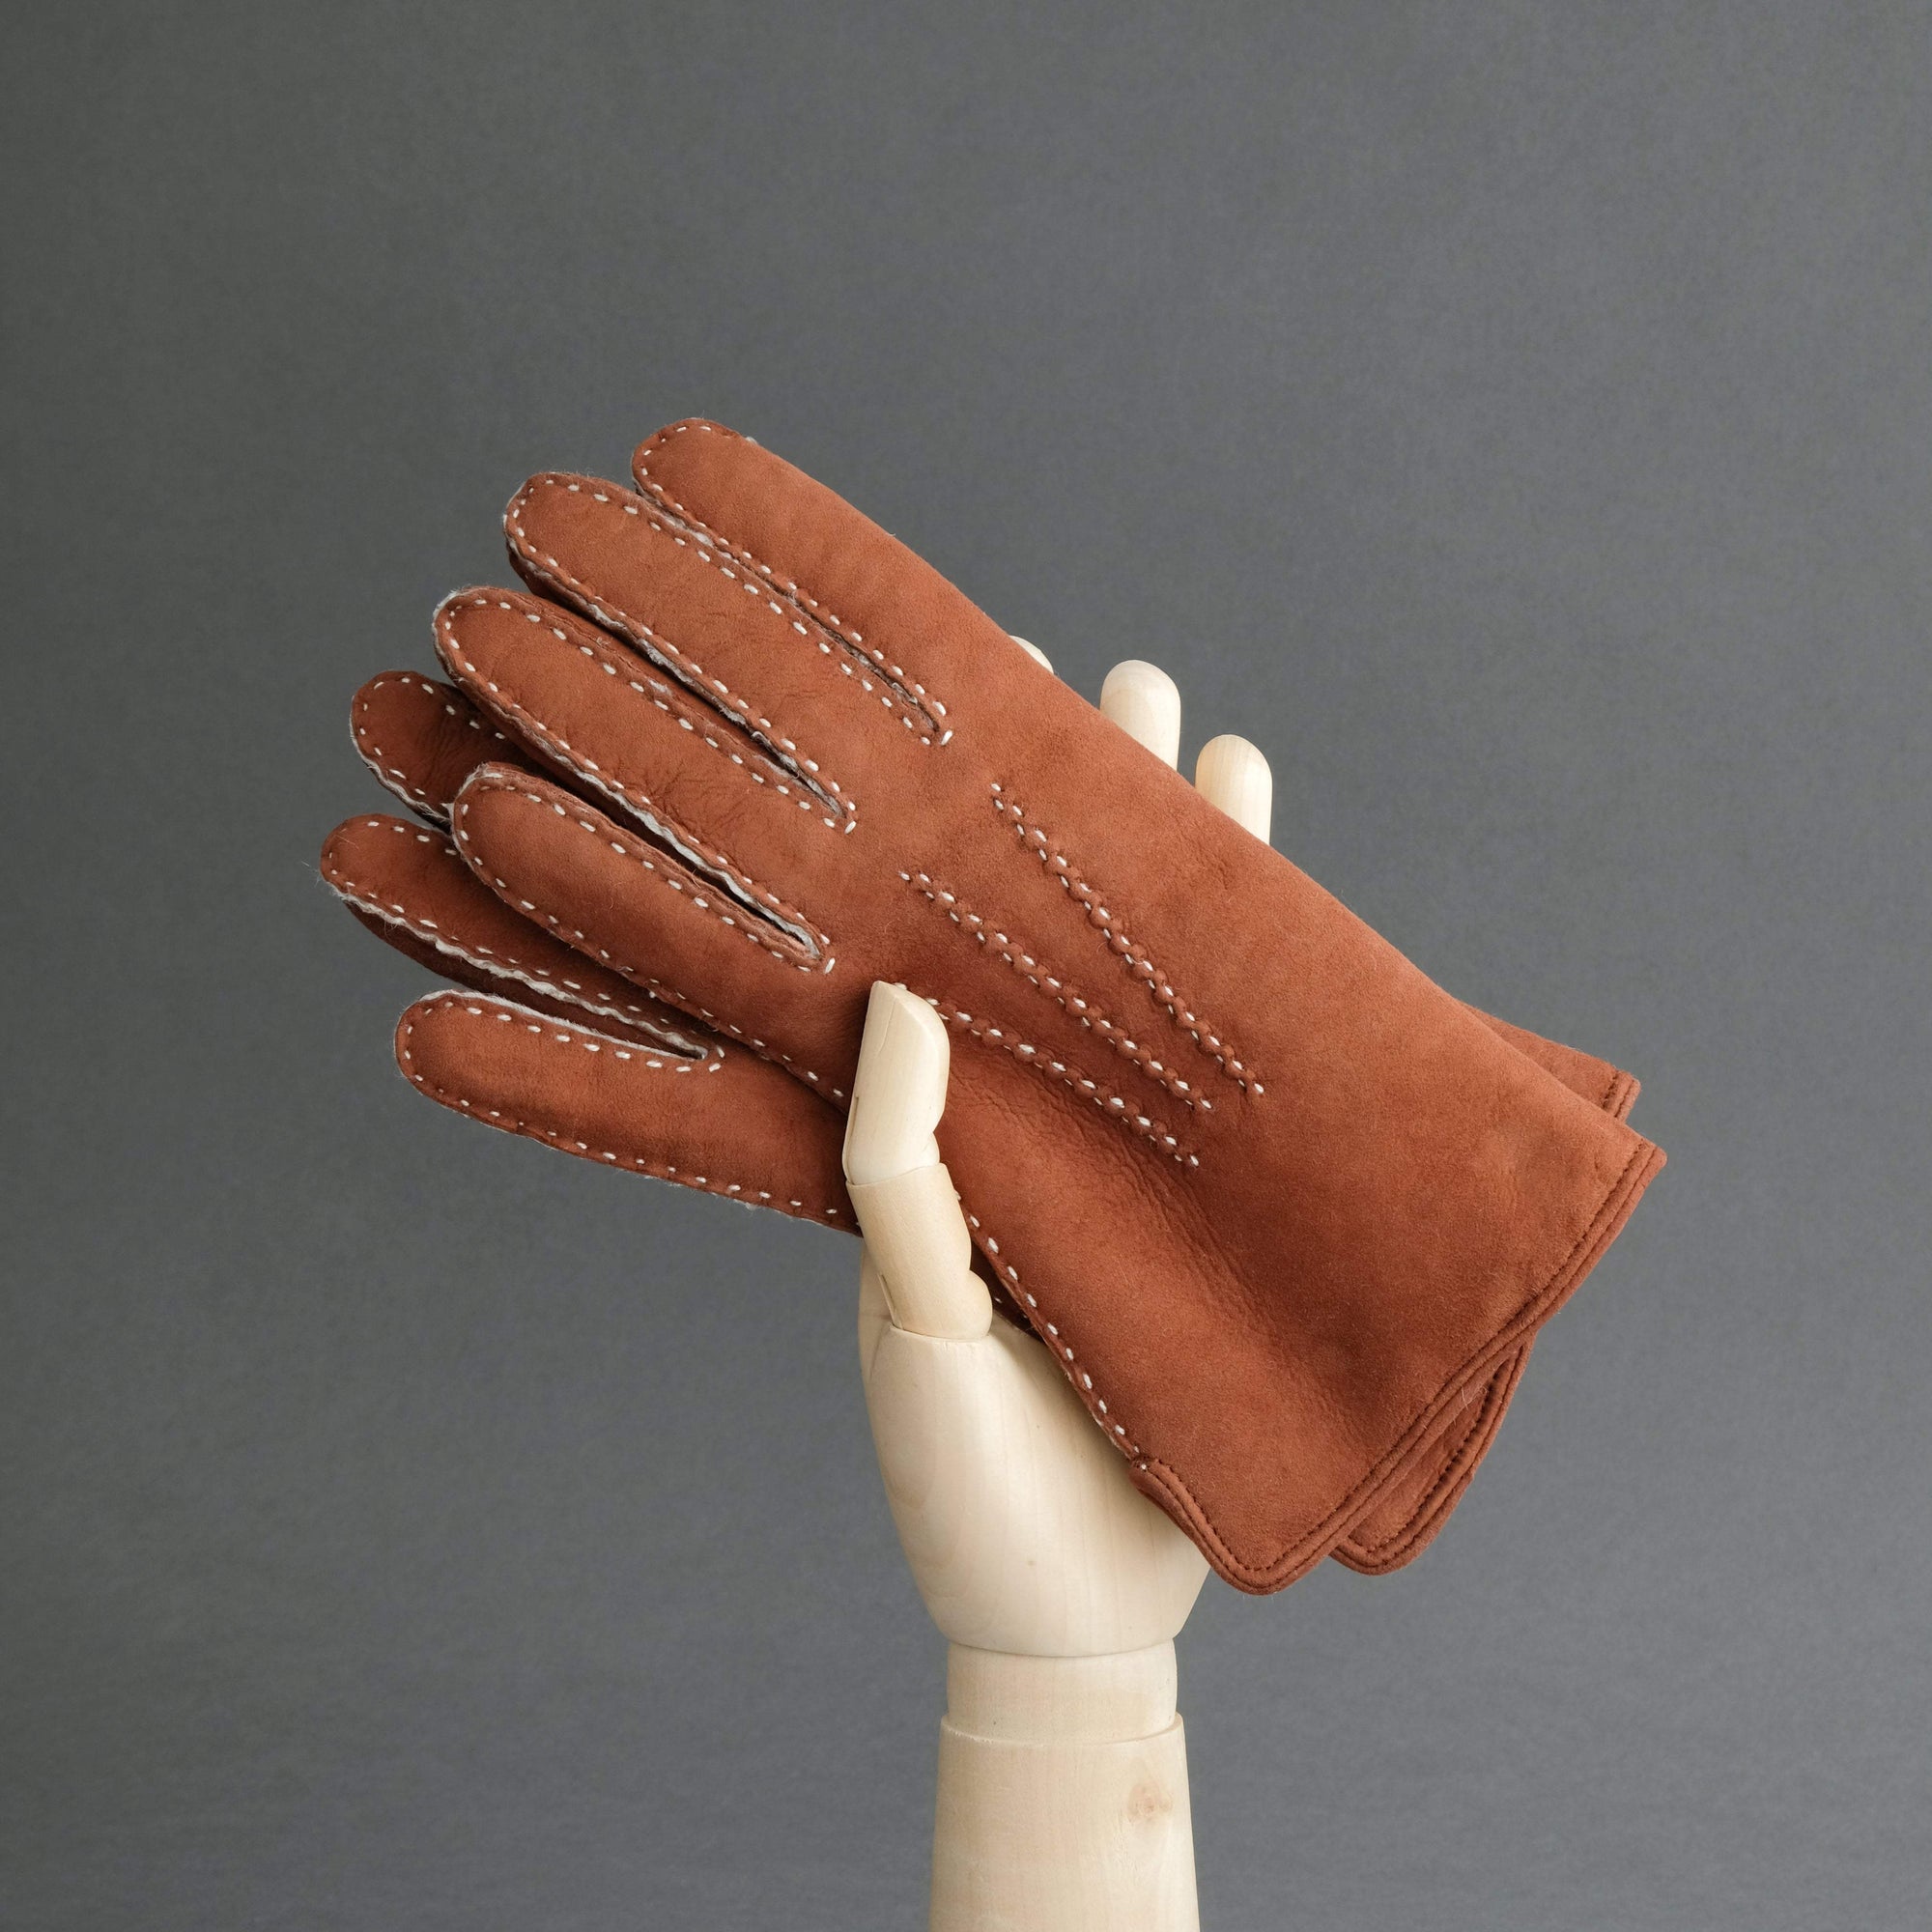 Ladies Hand Sewn Gloves From Rust Curly Lambskin - TR Handschuhe Wien - Thomas Riemer Handmade Gloves